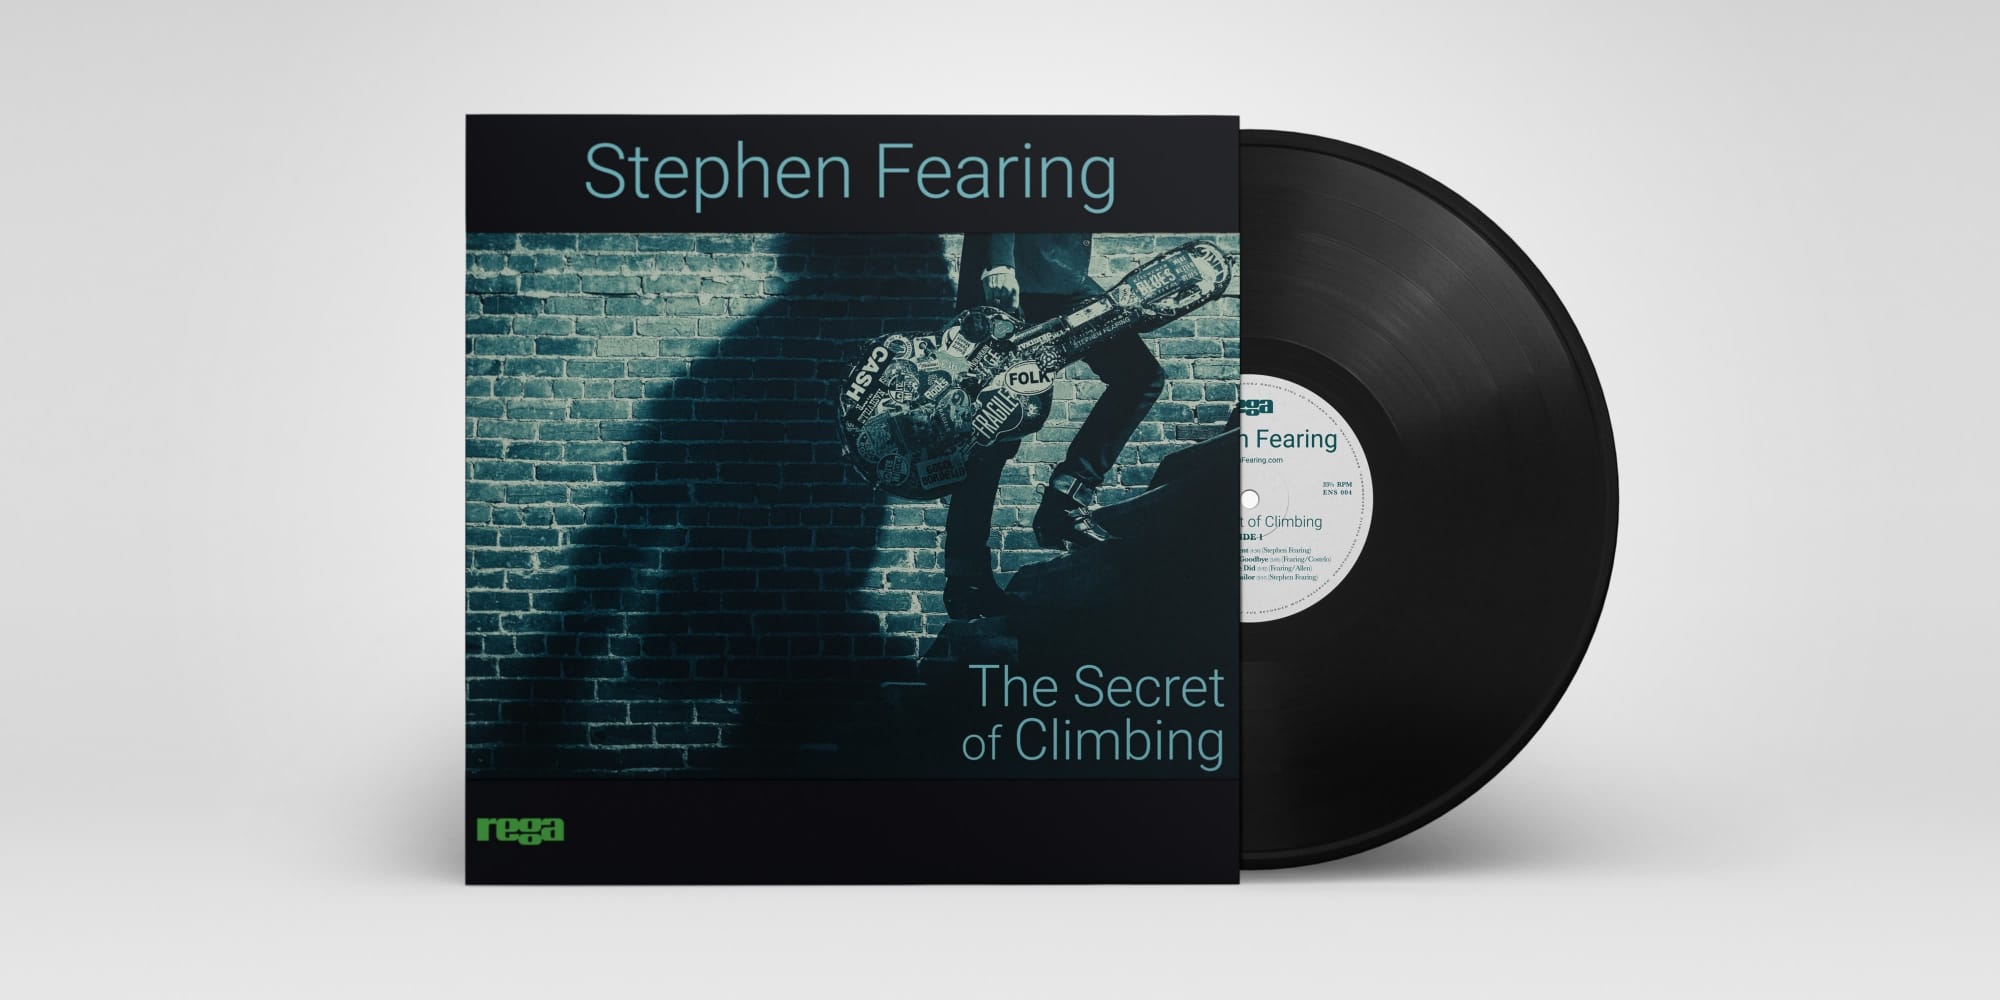 ‘The Secret of Climbing’ album cover